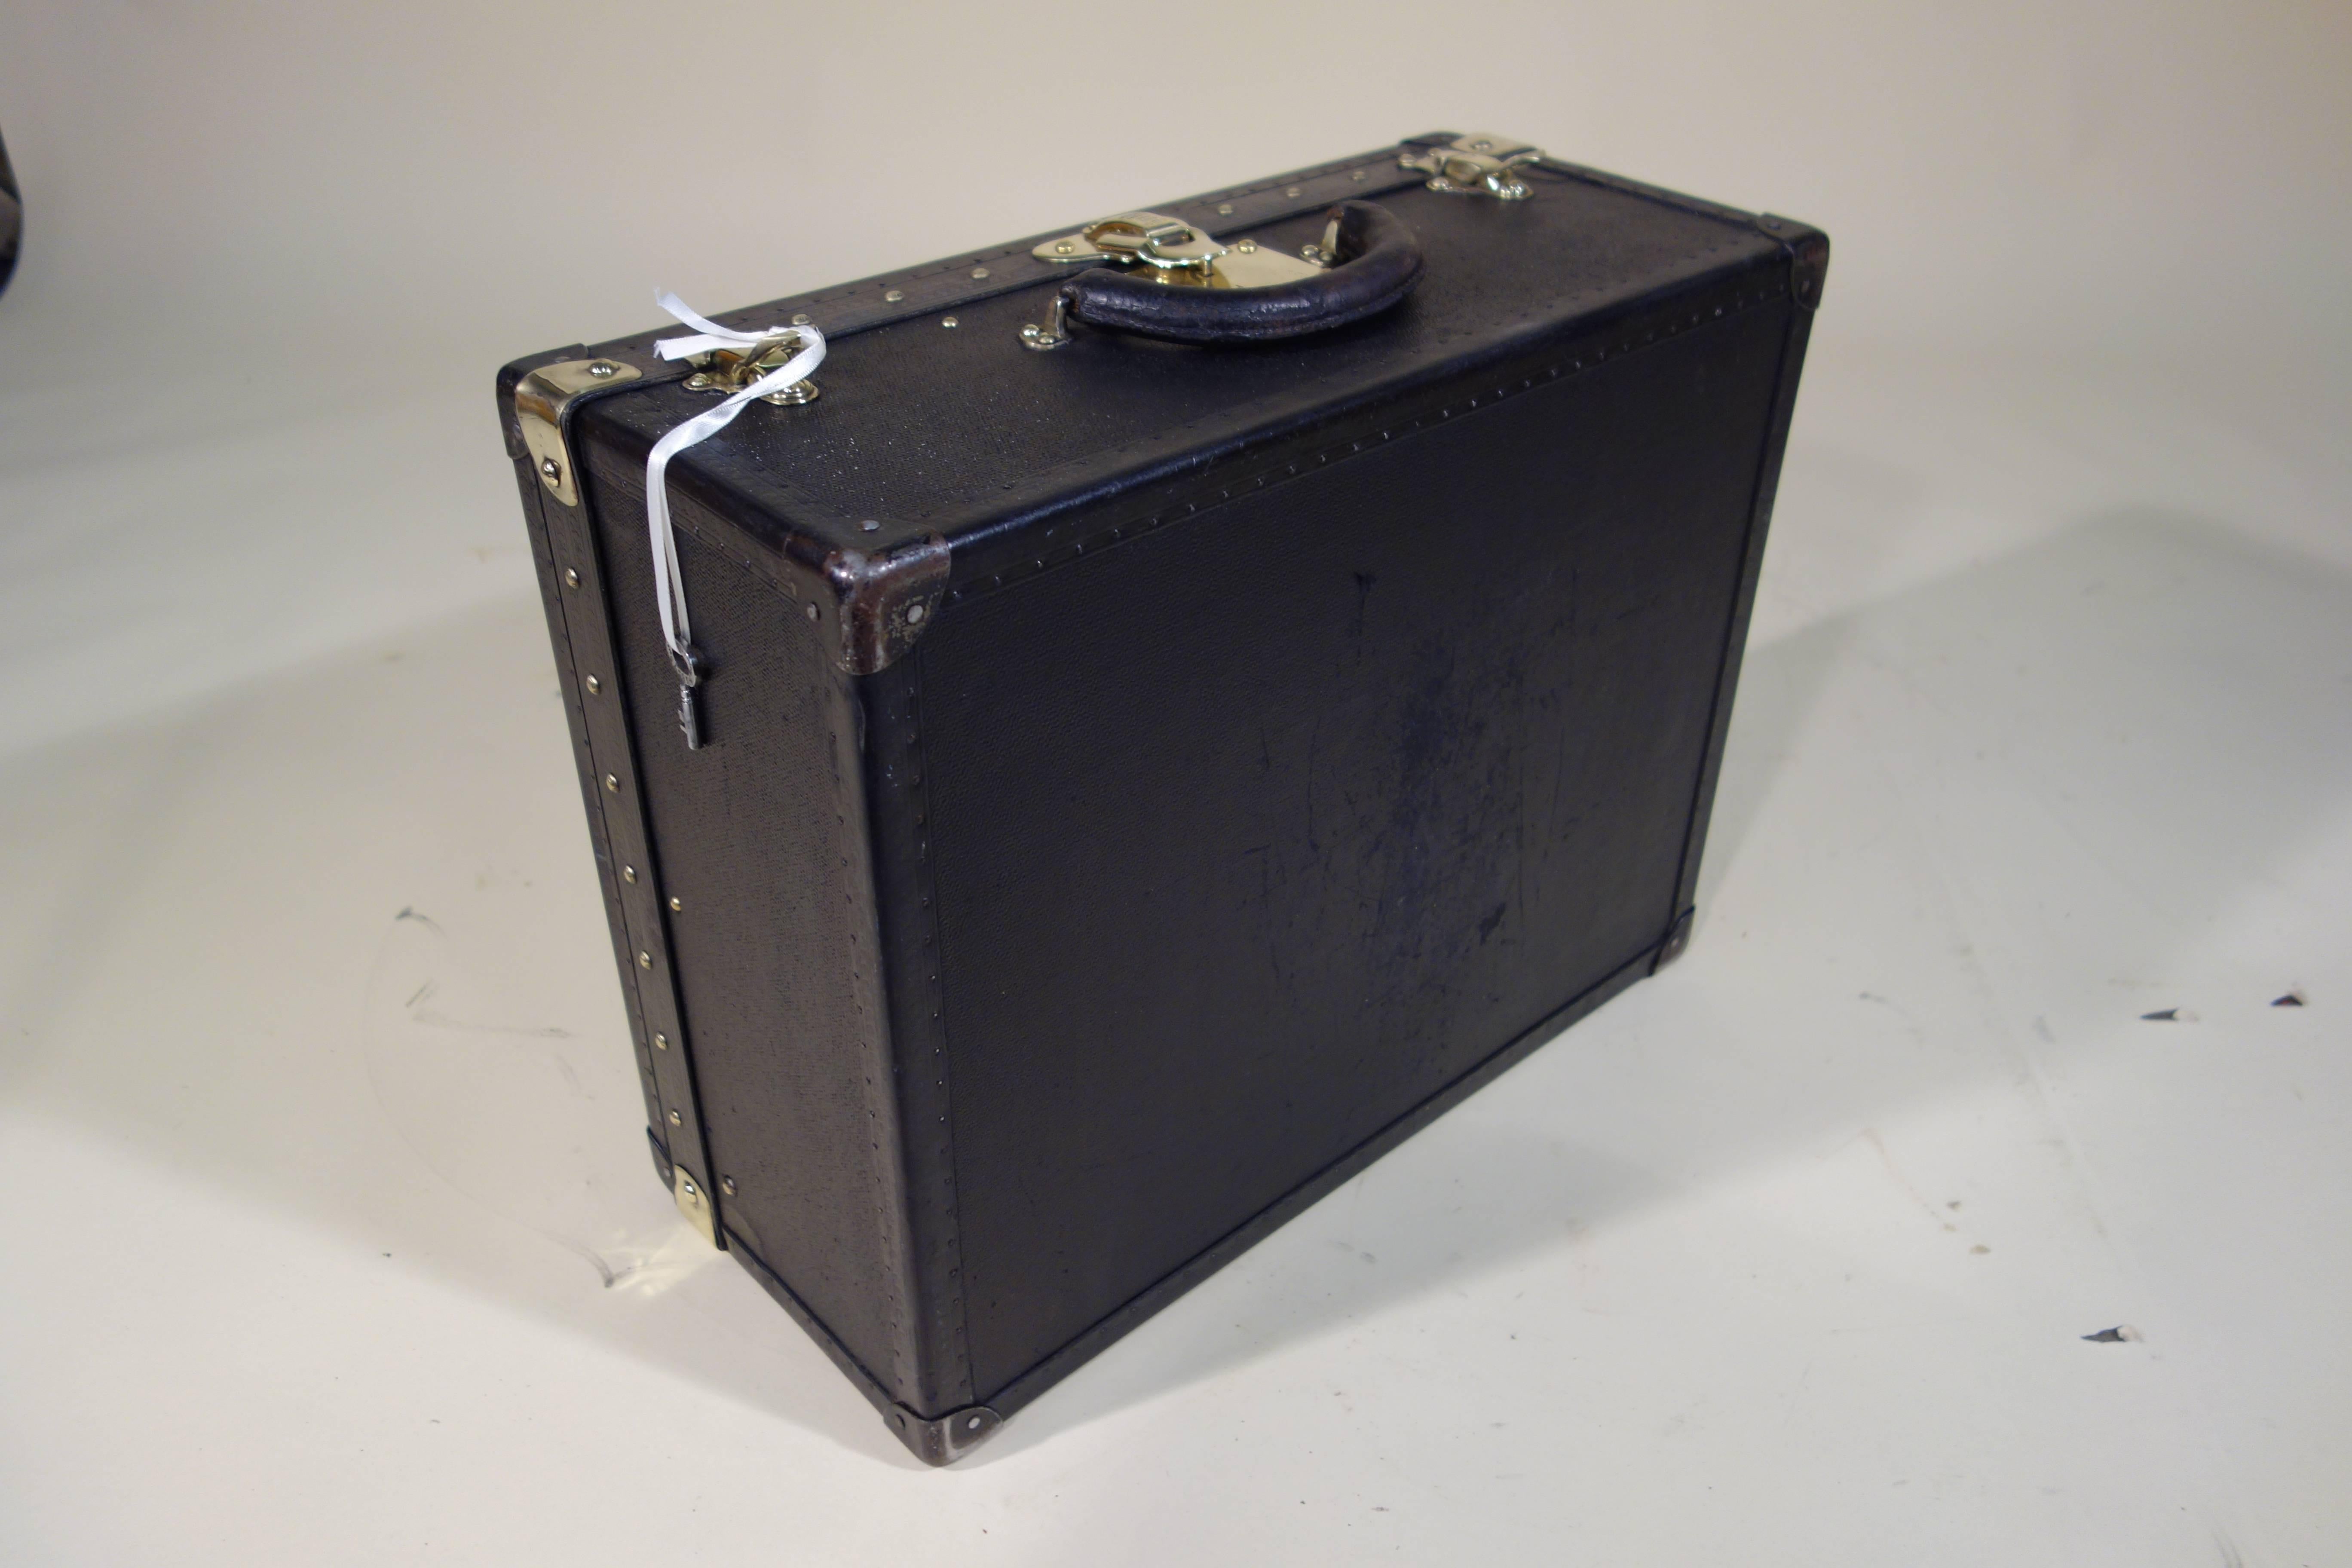 Louis Vuitton black leather suitcase

Massif brass for Lock and hasp

original inside

Original leather handel

Size in cm : 50 cm de Wide X 22 cm High X 39 cm deep
